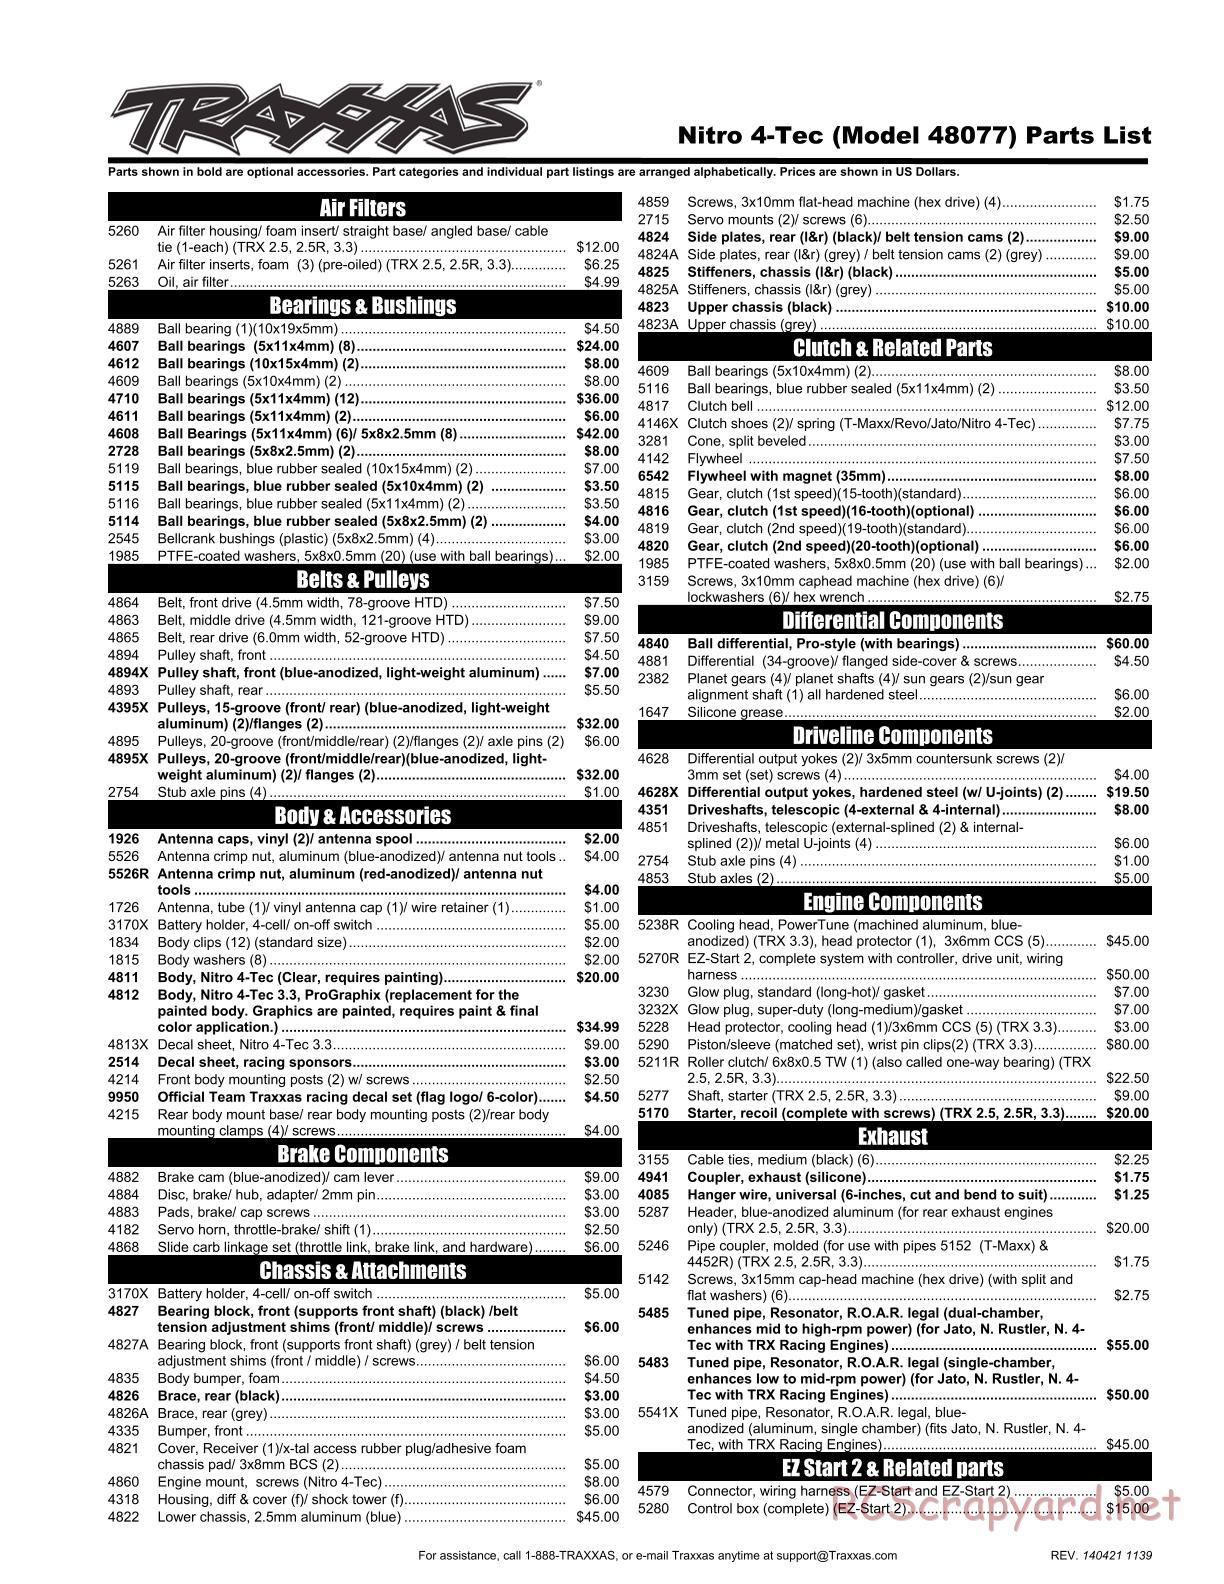 Traxxas - Nitro 4-Tec 3.3 (2014) - Parts List - Page 1